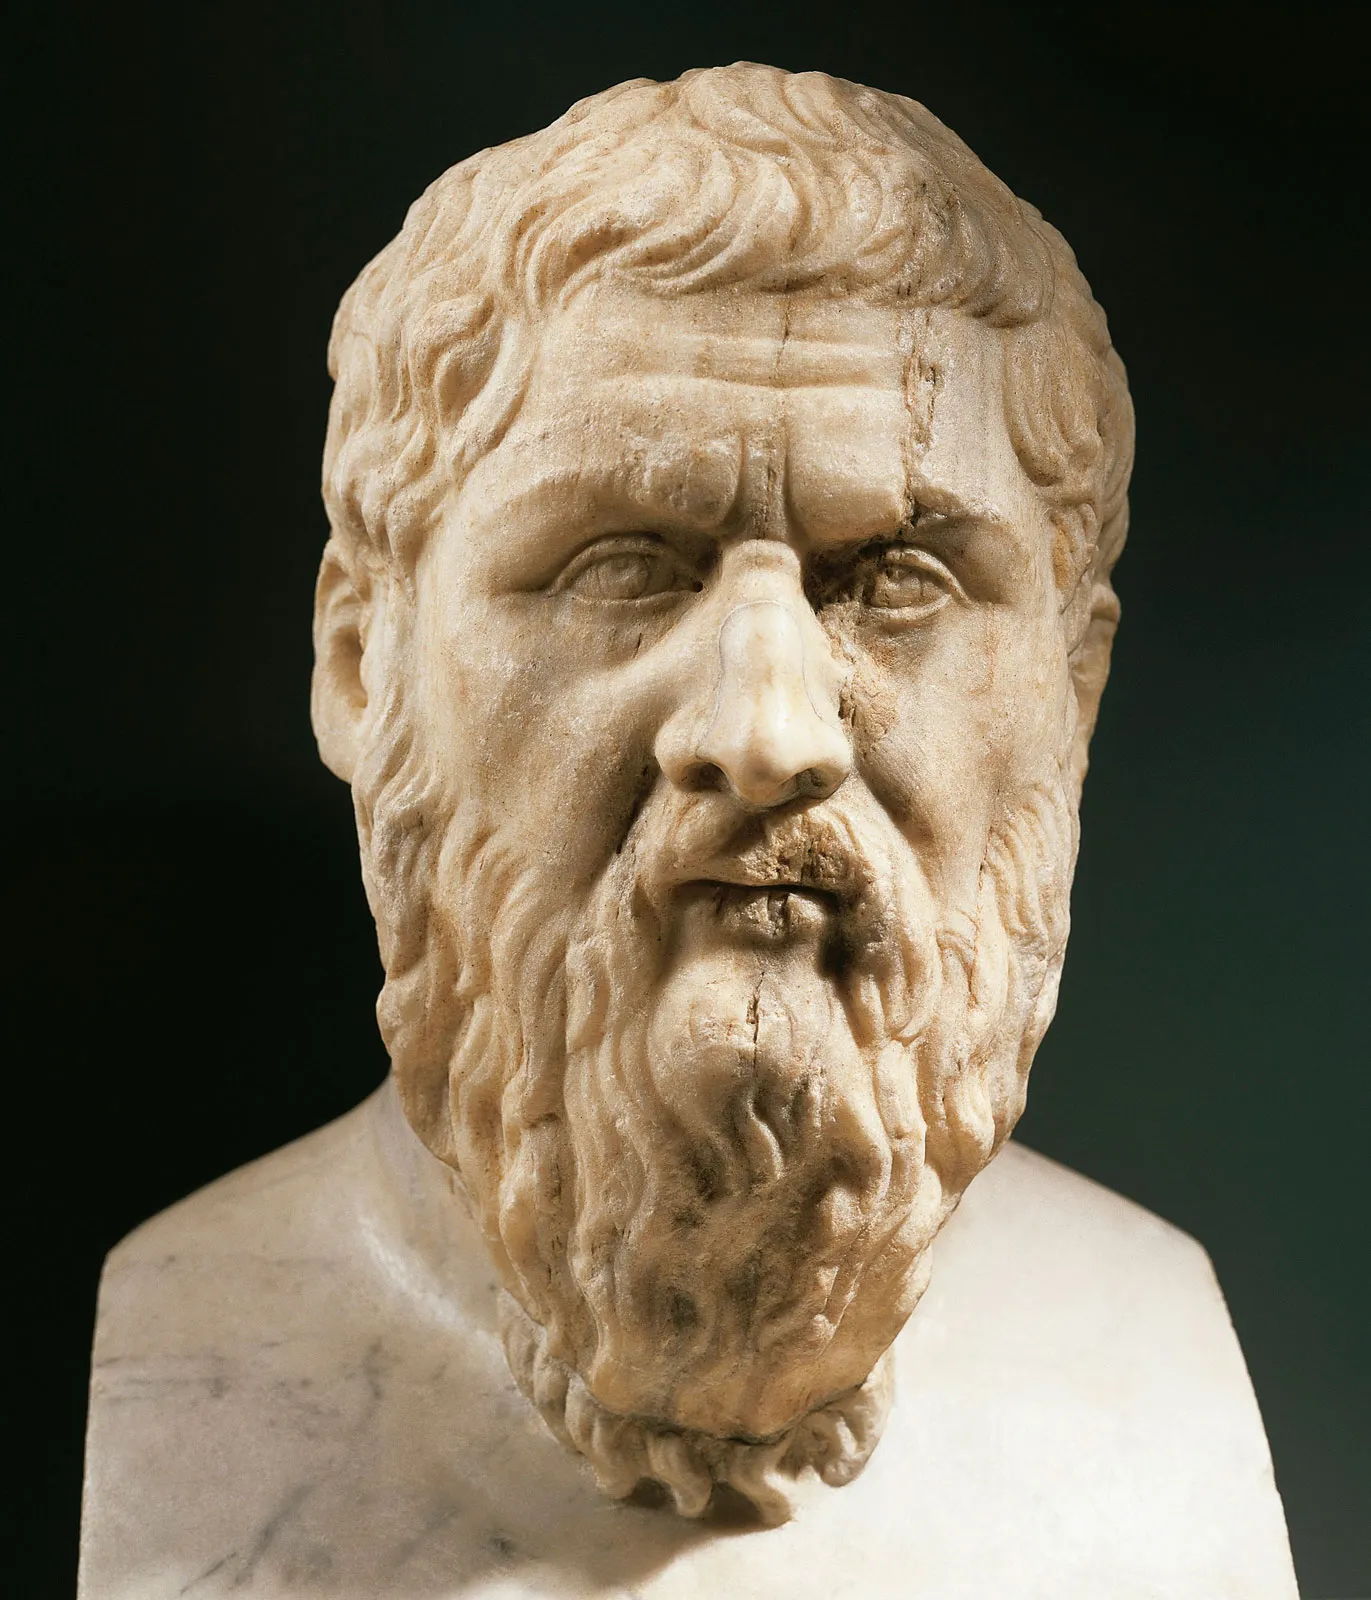 4th Century BCE influencer